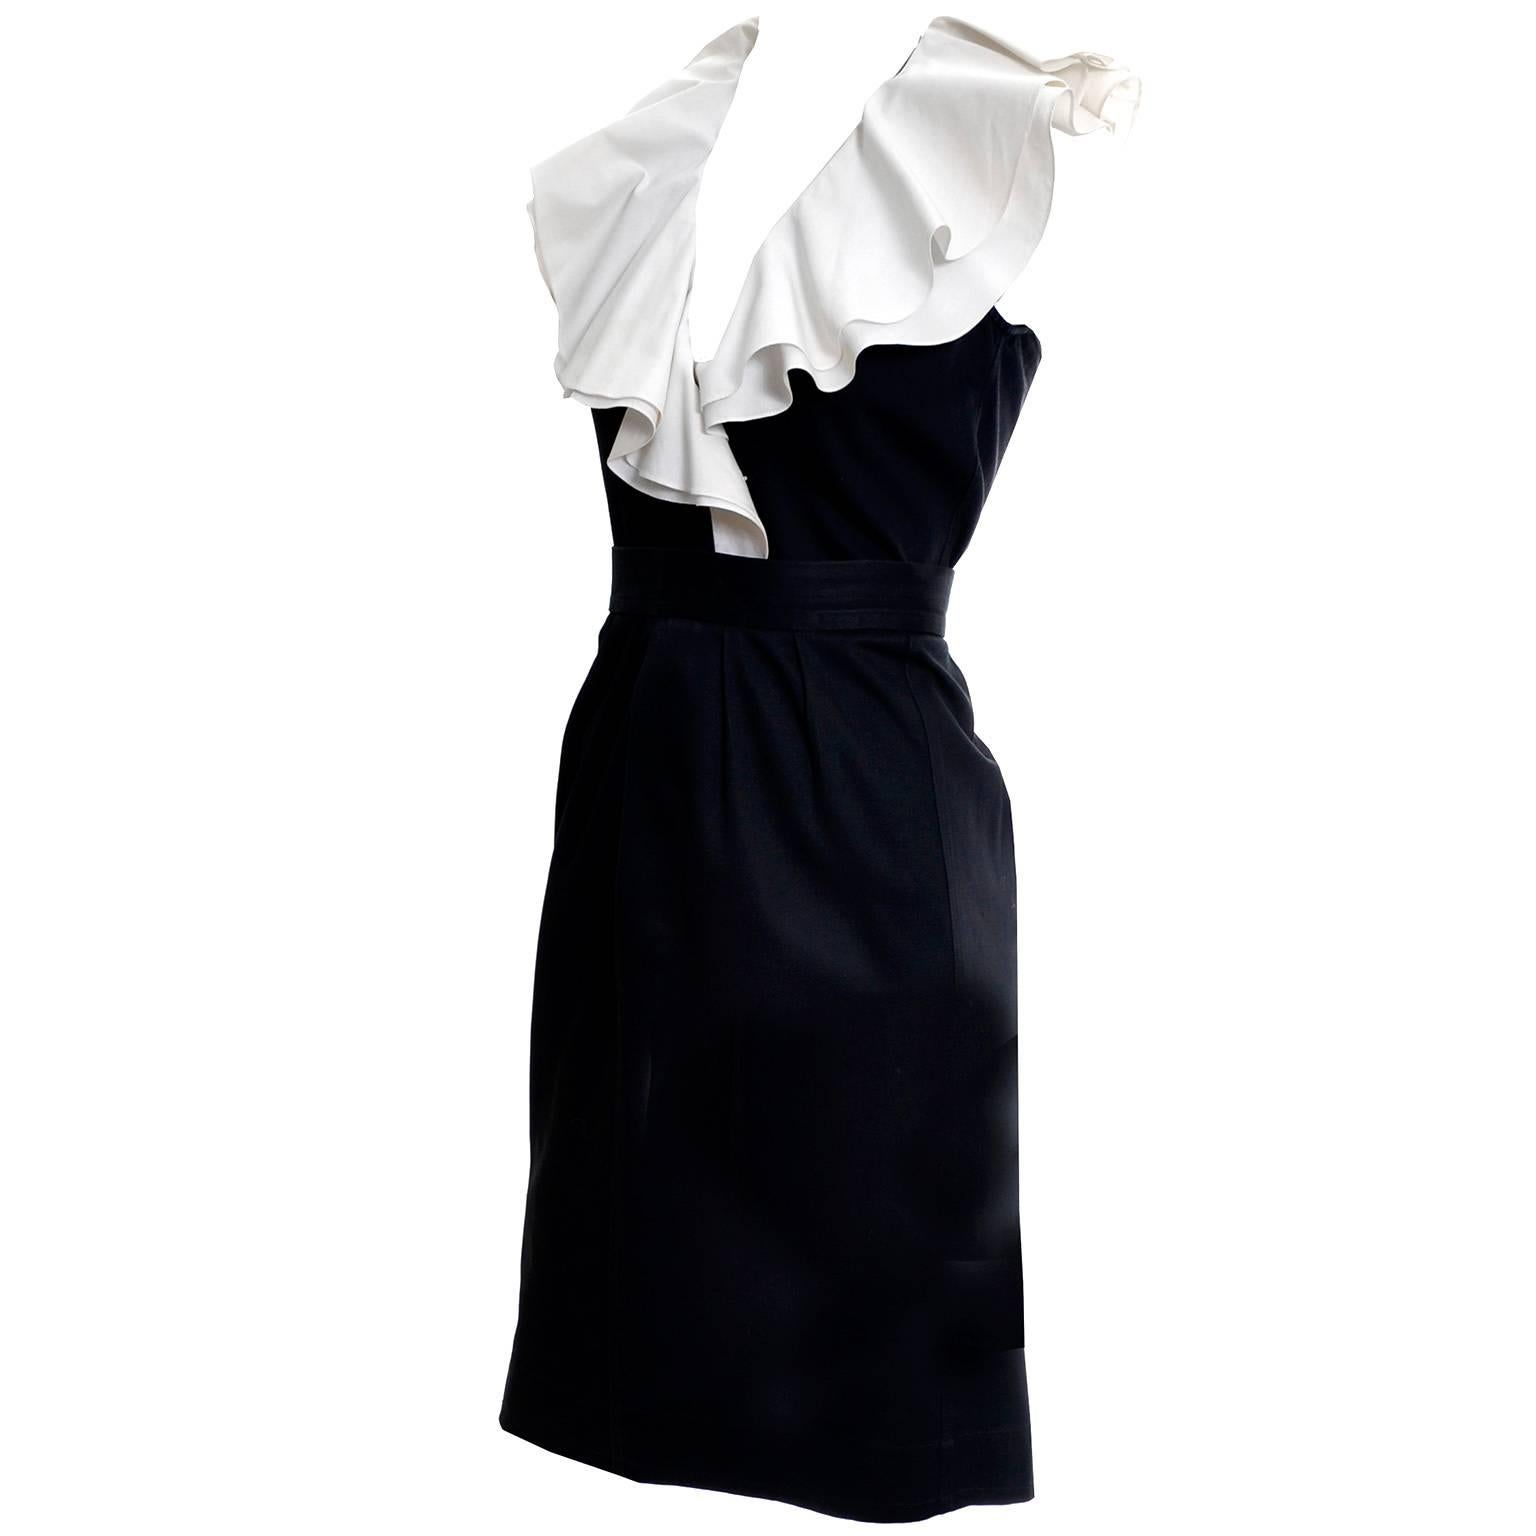 1980s Yves Saint Laurent Black Cotton 2 pc Dress with White Ruffled Collar